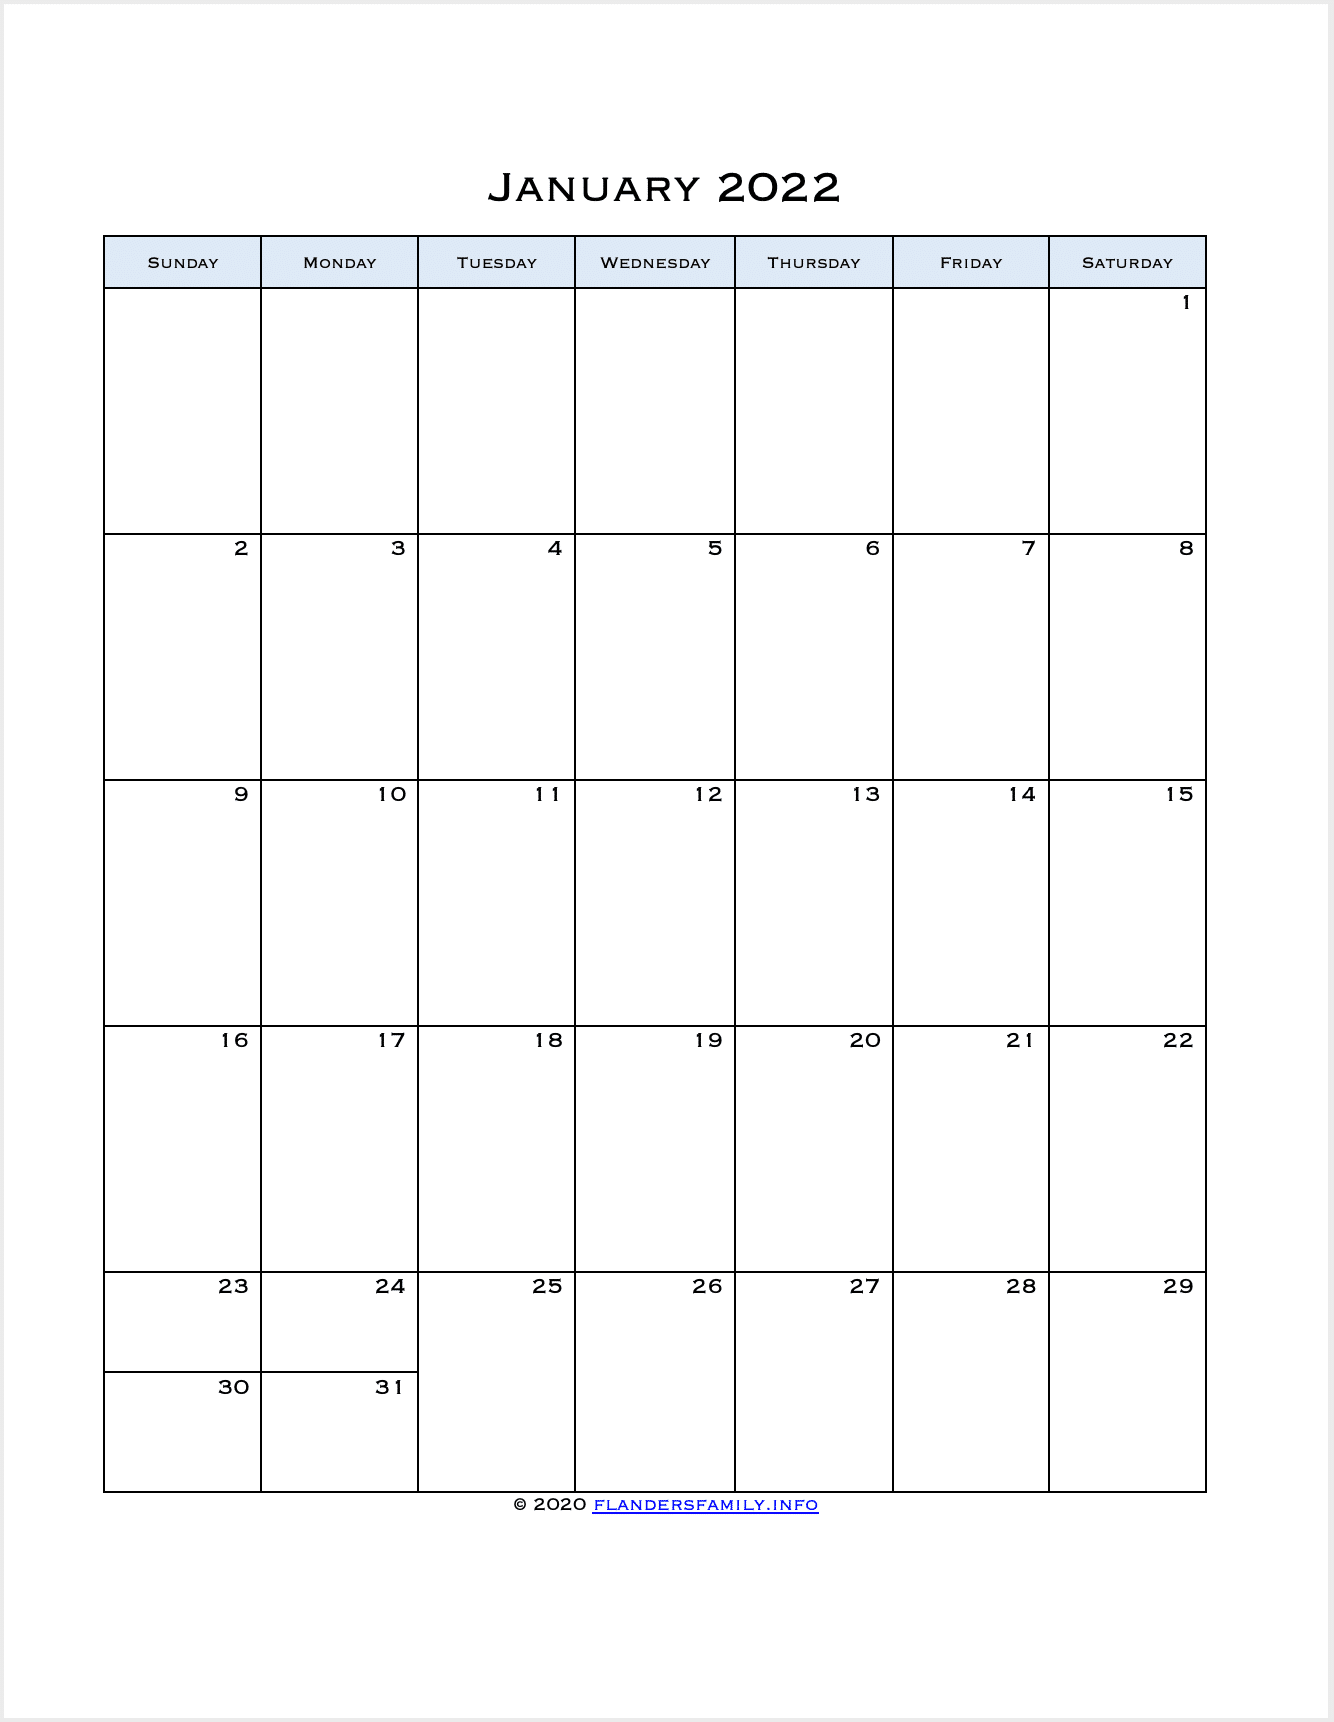 2022 calendars free printables